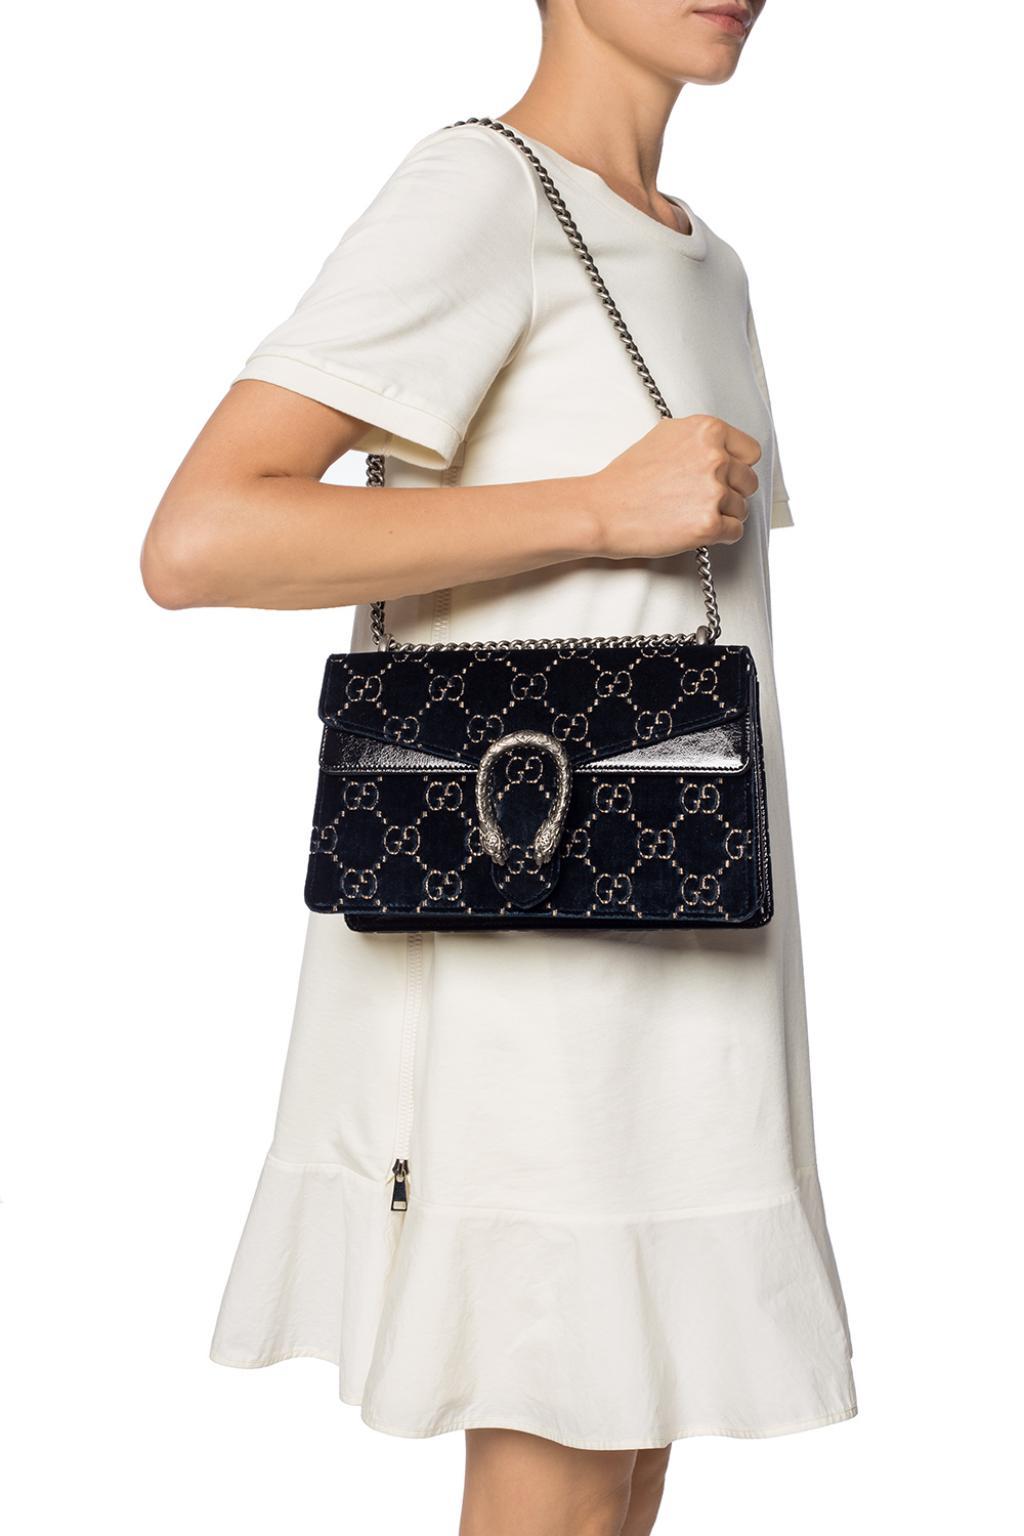 Gucci Dionysus Gg Small Velvet & Leather Shoulder Bag in Navy Blue Burgundy  (Blue) | Lyst